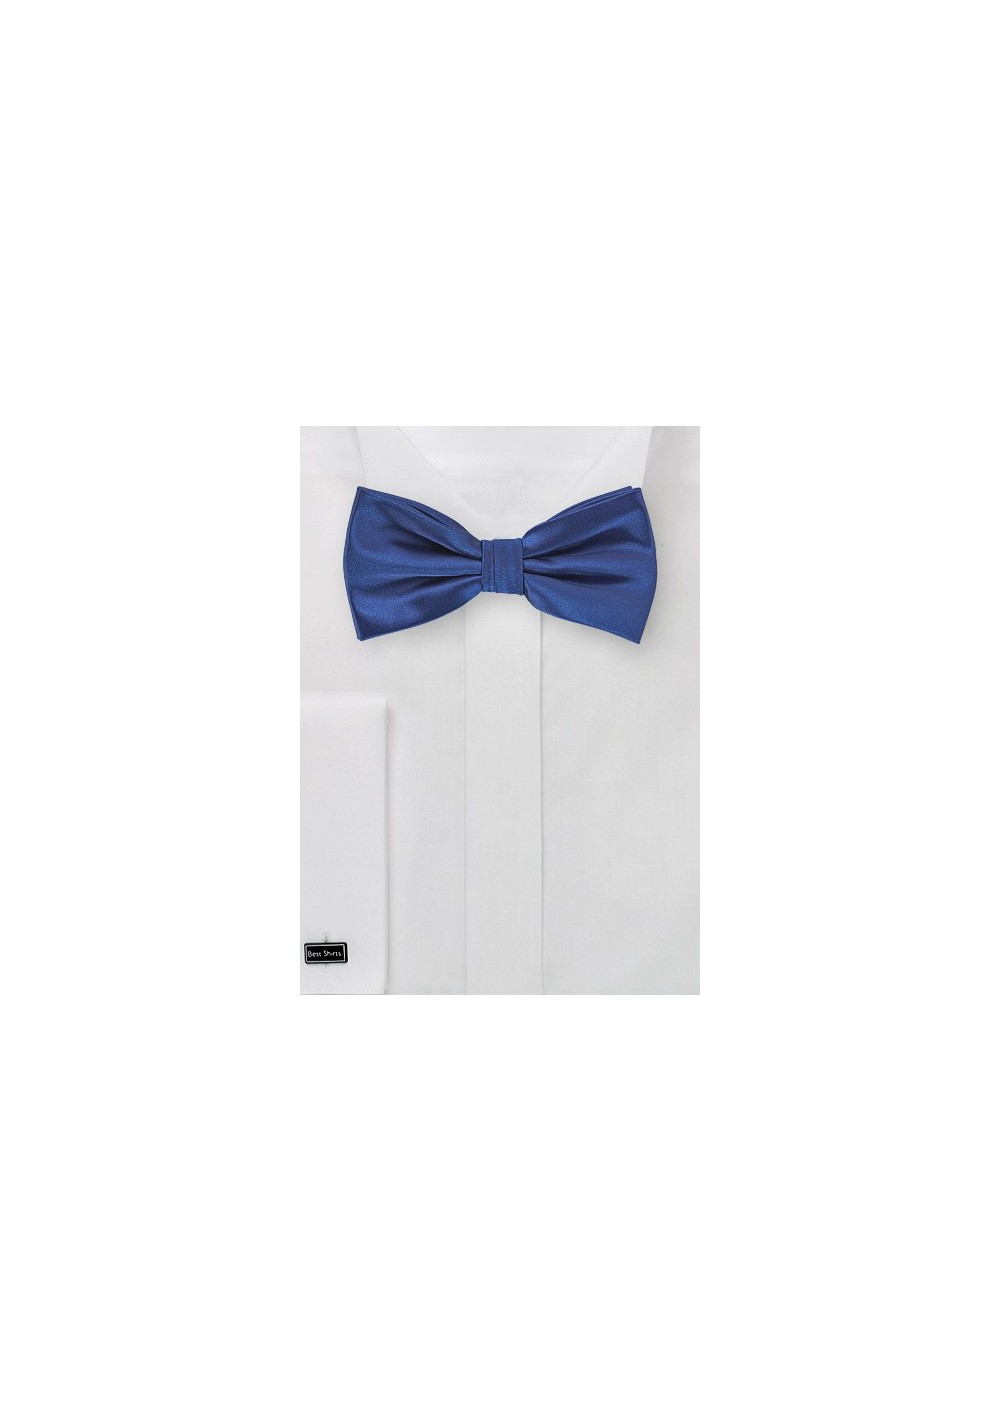 Elegant Bow Tie in Royal Blue